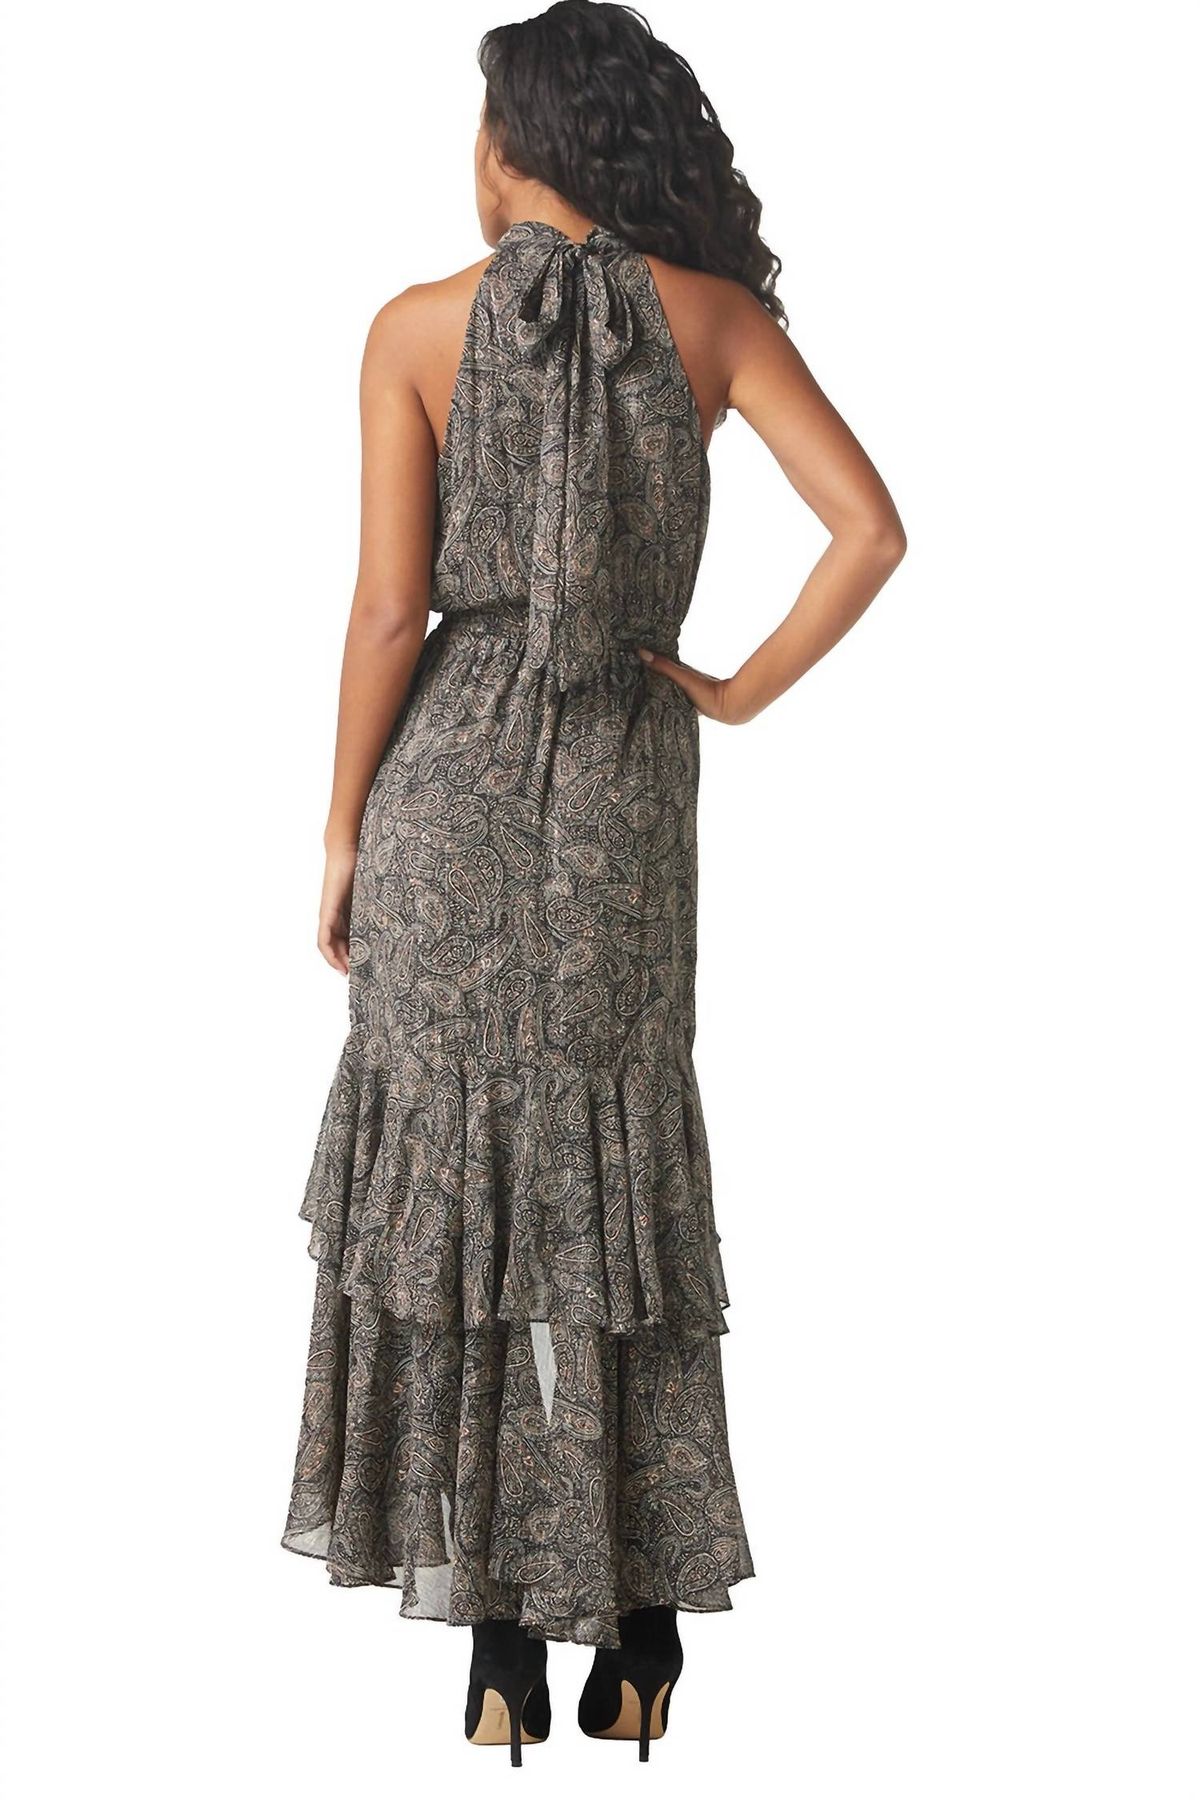 Style 1-4184714035-3236 Misa Los Angeles Size S High Neck Black Side Slit Dress on Queenly